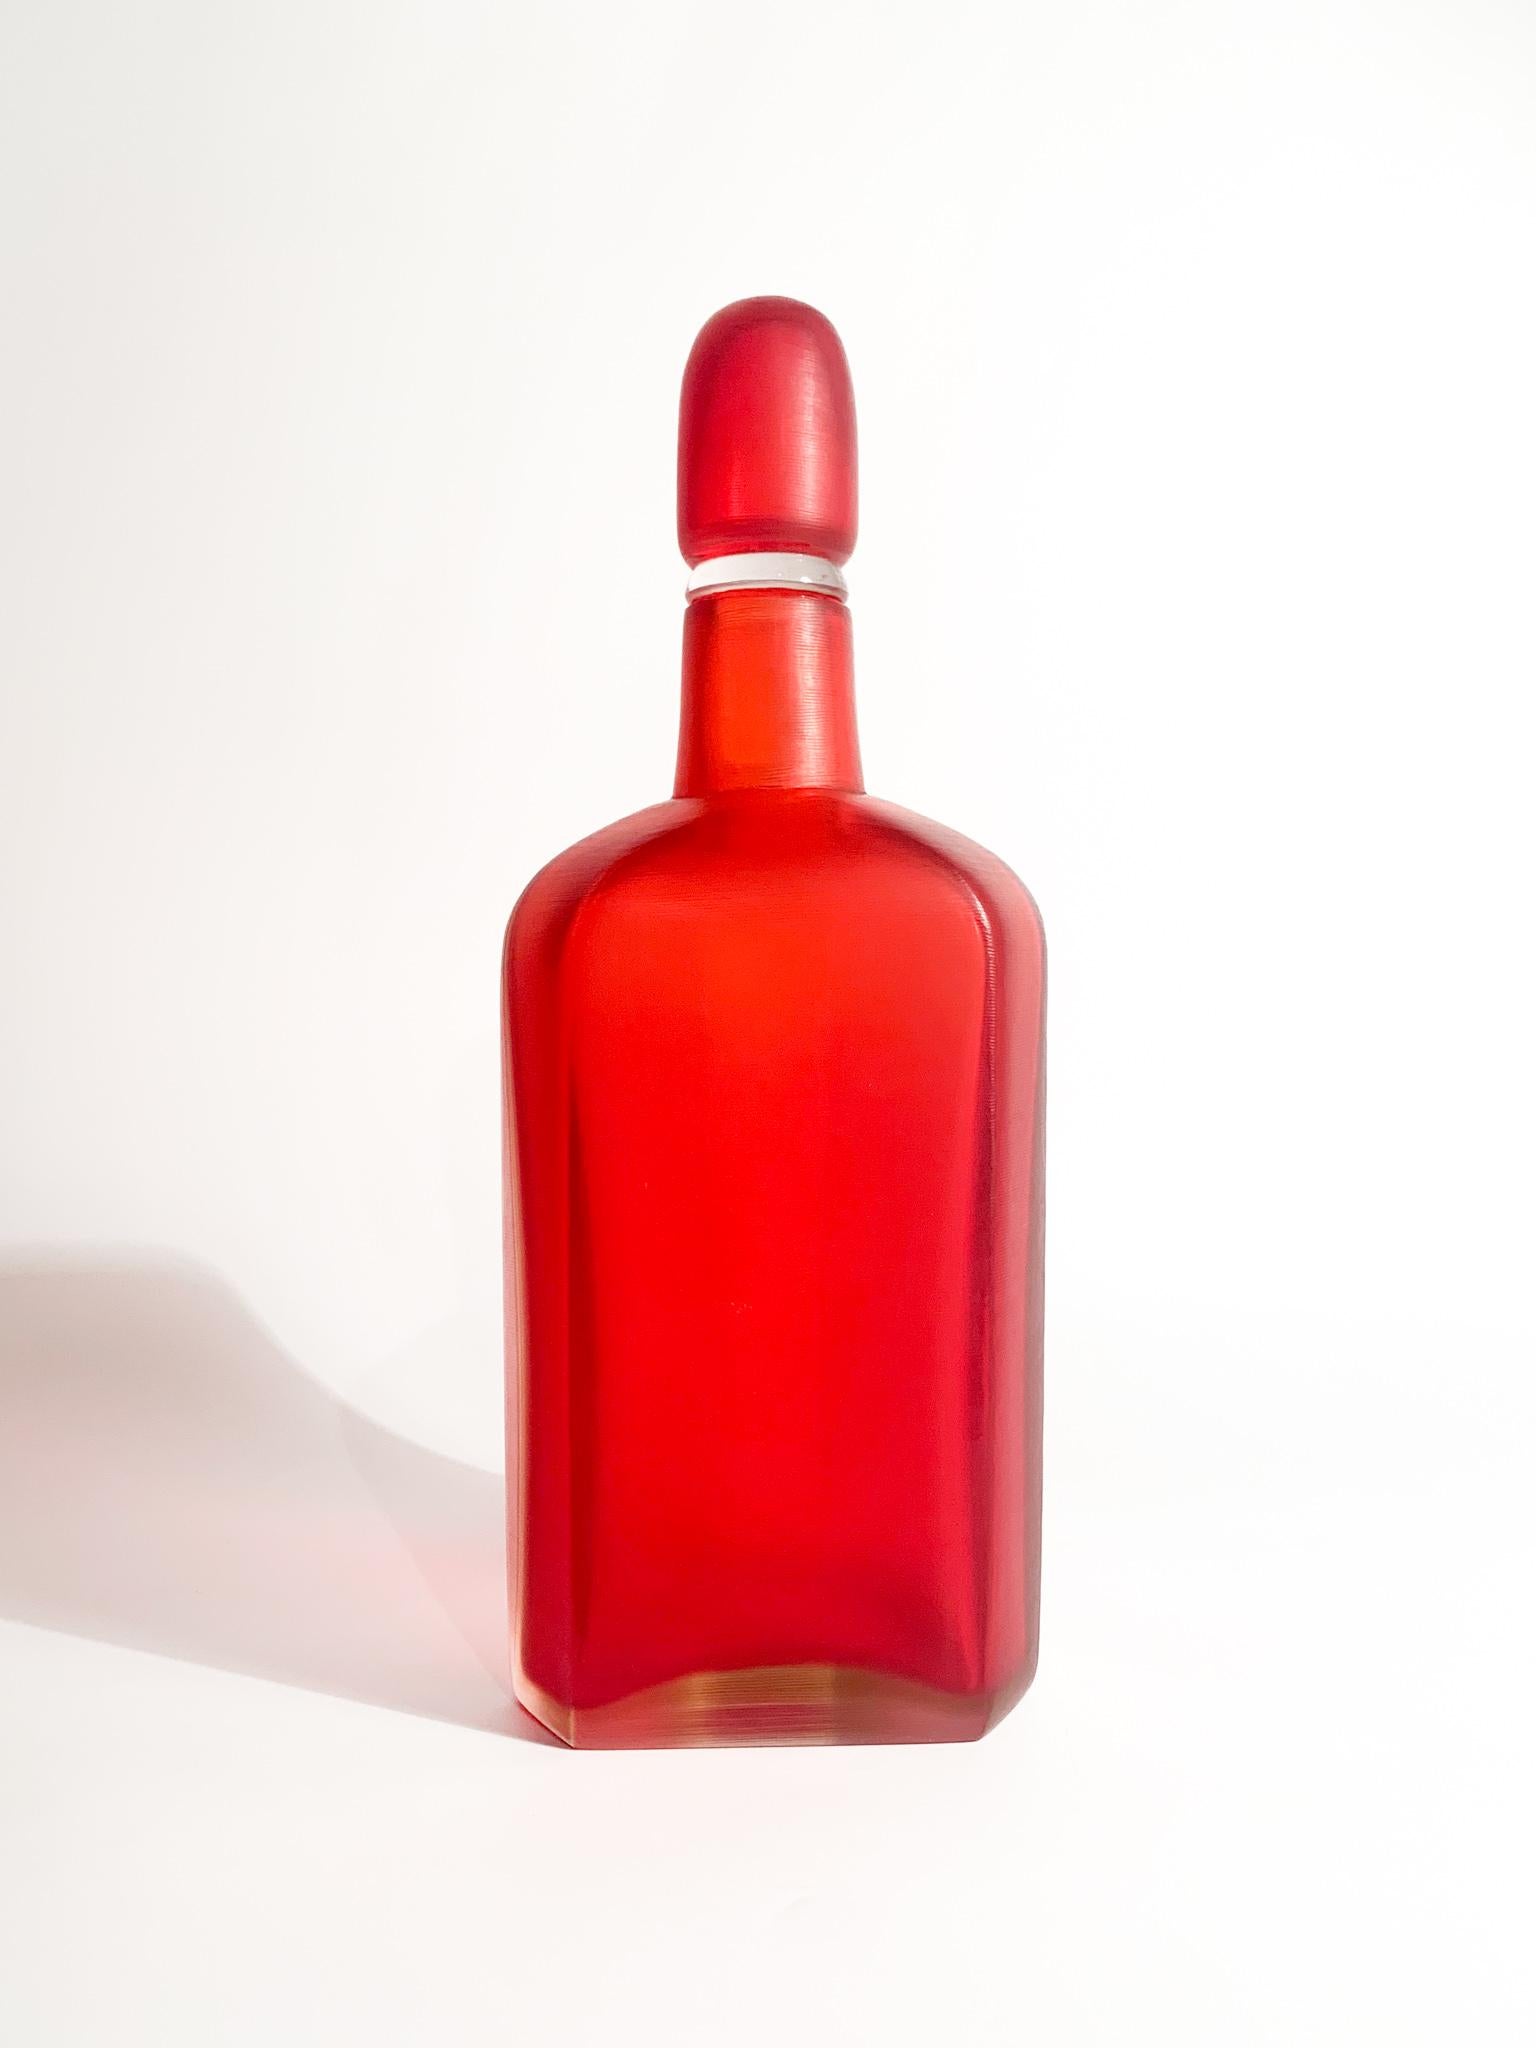 Paolo Venini Gravierte Murano Glasflasche von 2004 (Muranoglas) im Angebot